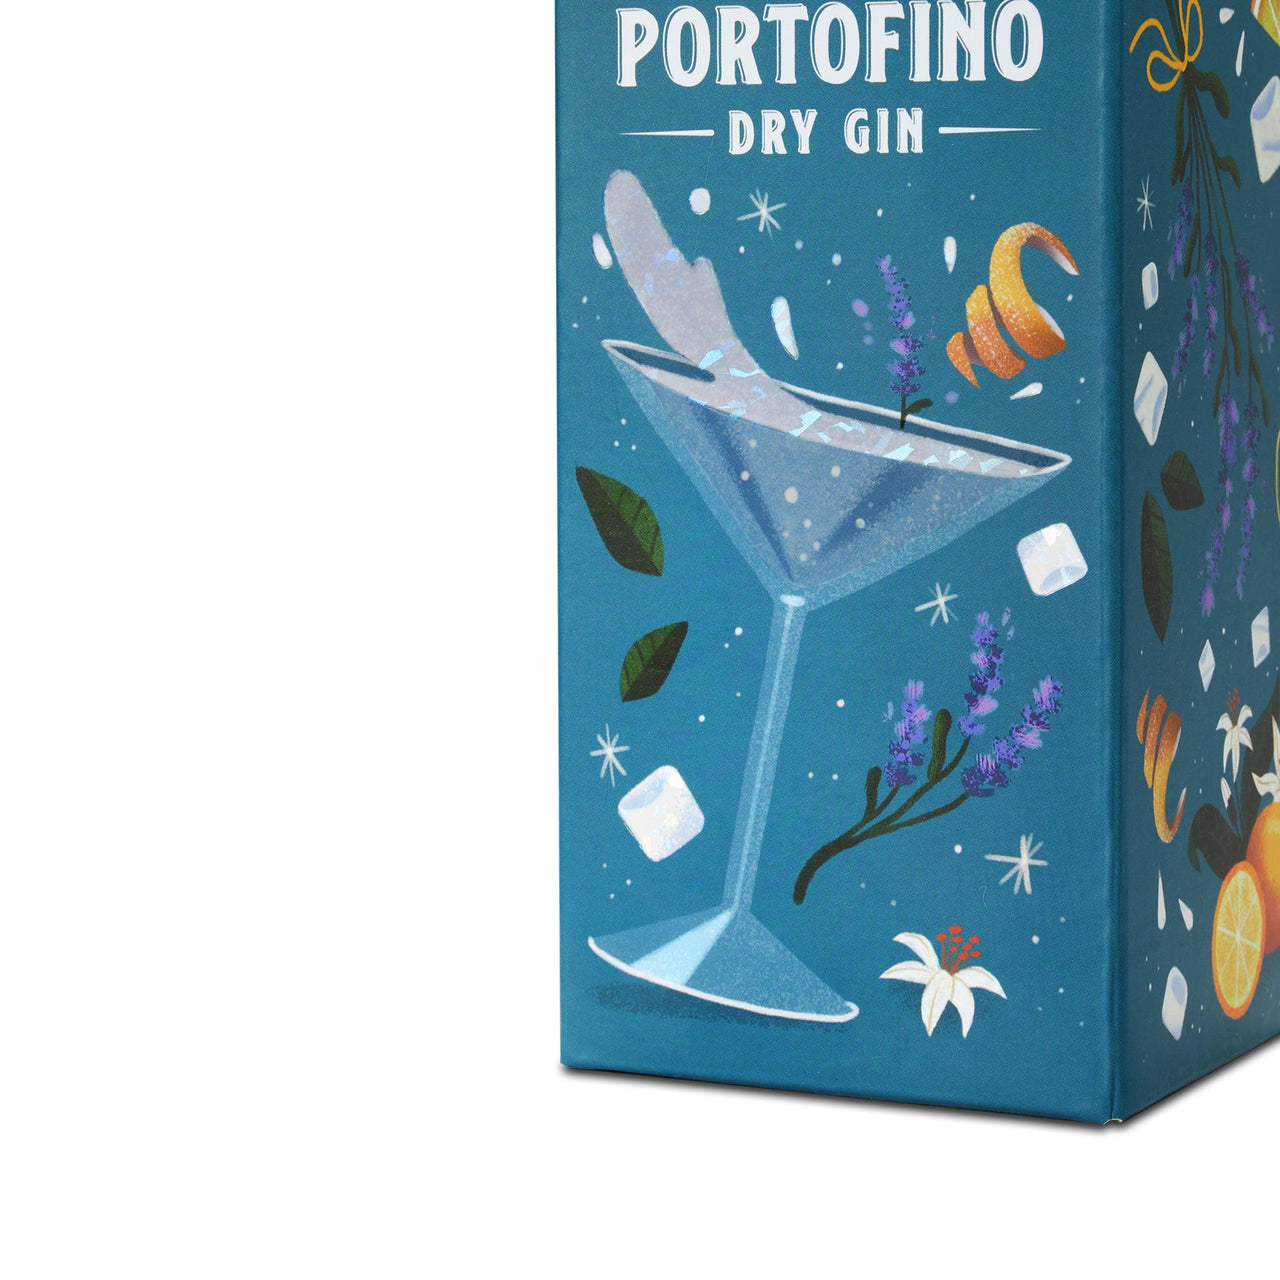 PORTOFINO DRY GIN 500 ml COCKTAIL SERIES EDITION